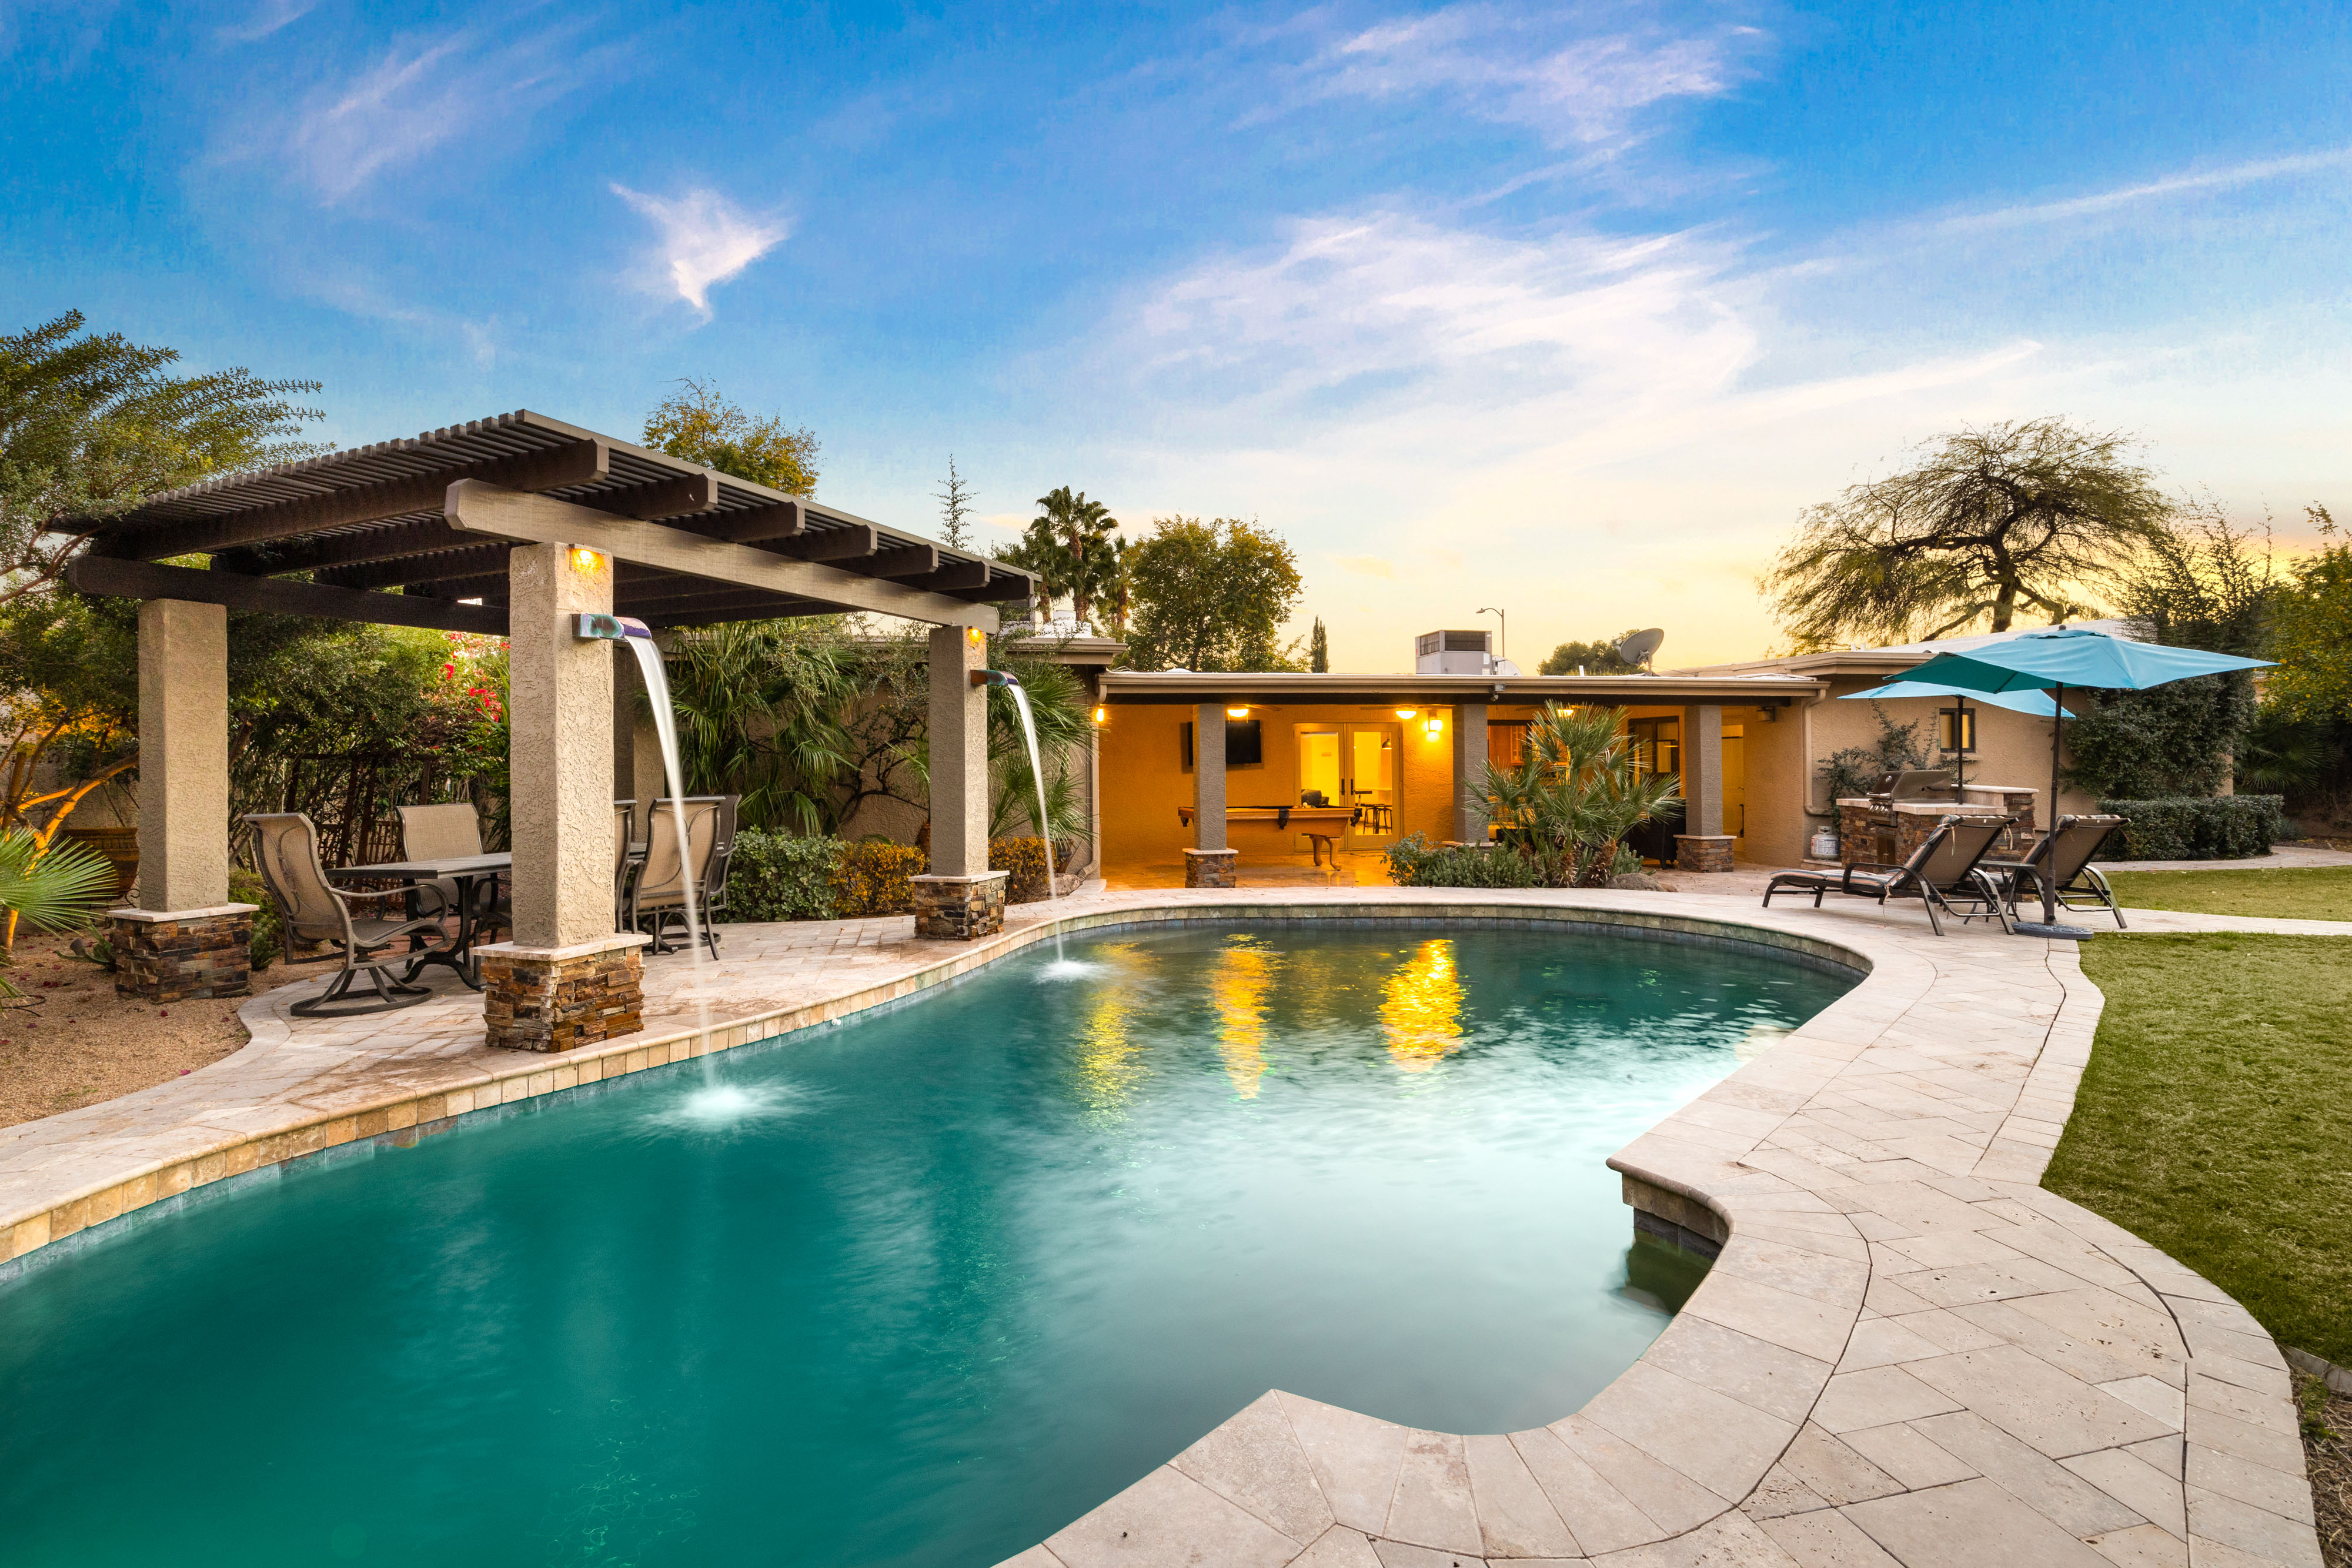 Property Image 1 - Waltann Luxurious home w/ incredible backyard area, private pool, 1 dog ok!